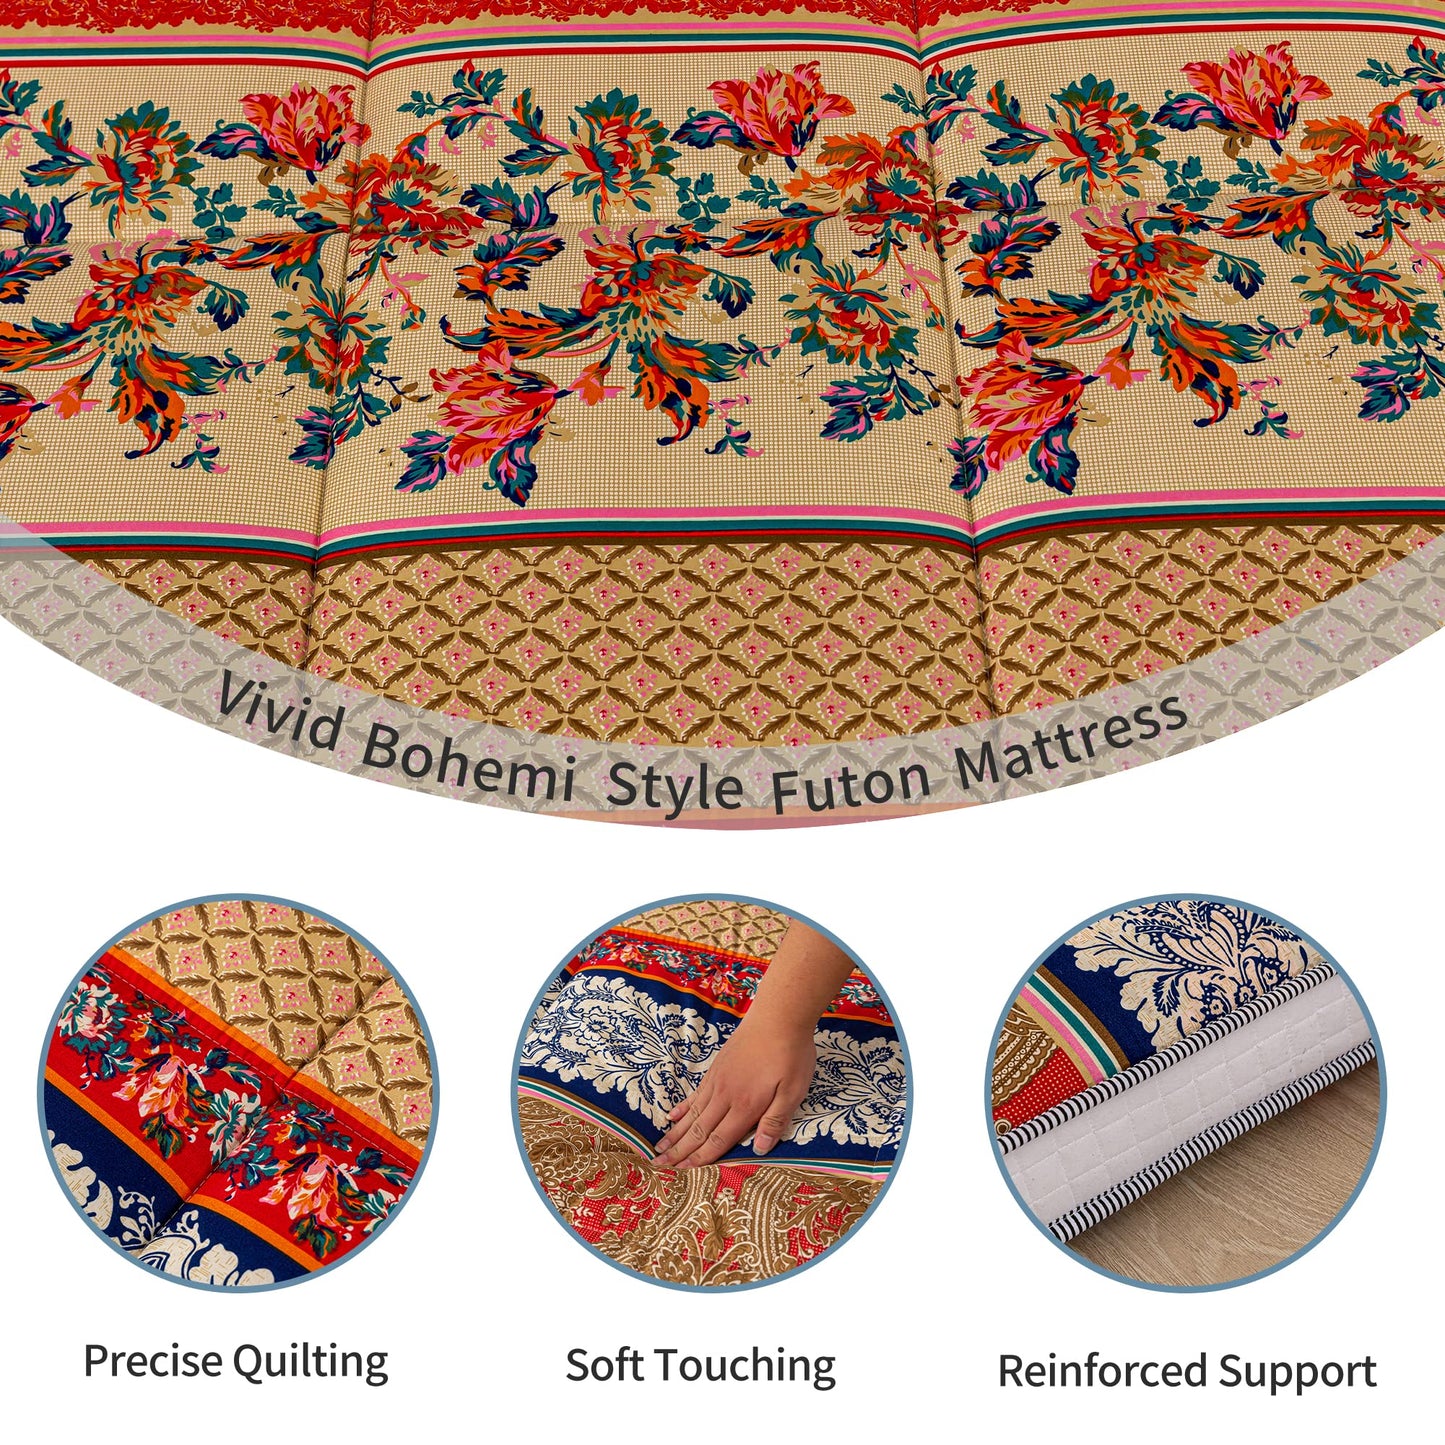 MAXYOYO Bohemian Retro Floor Mattress Vintage Floral Japanese Futon Mattress Thick Roll Up Thicken Sleeping Bed